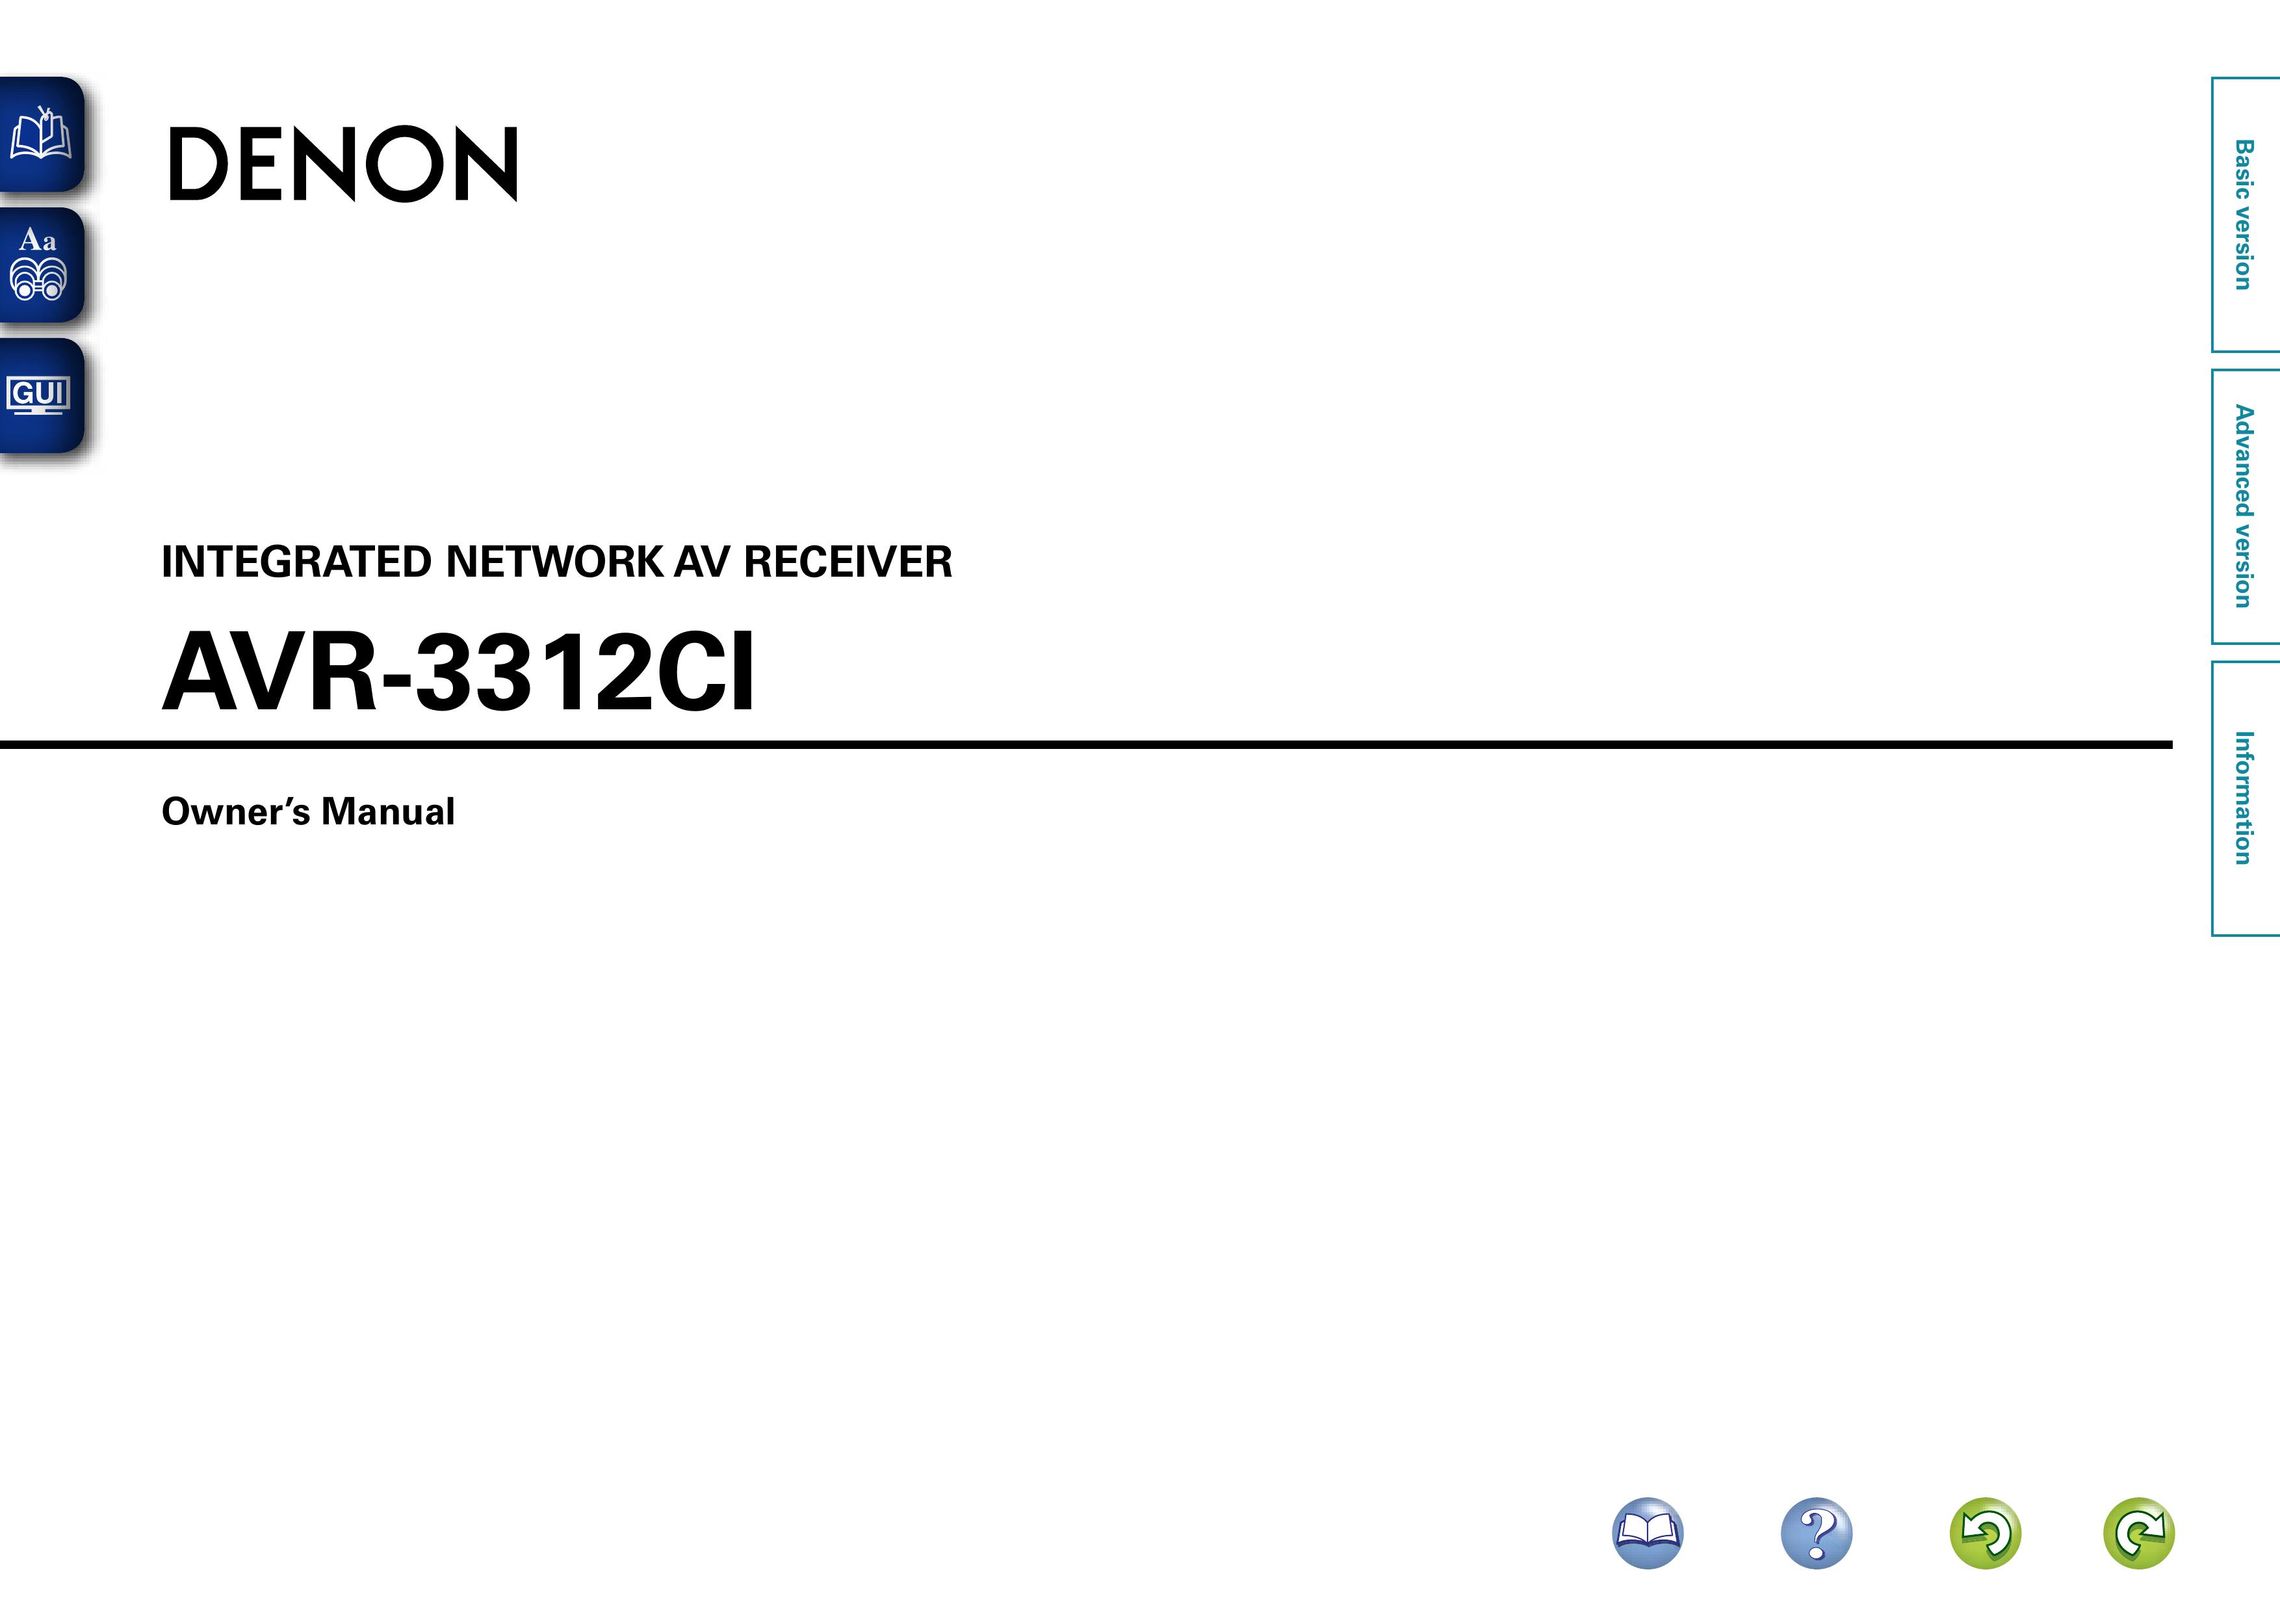 Denon AVR-3312CI Network Hardware User Manual